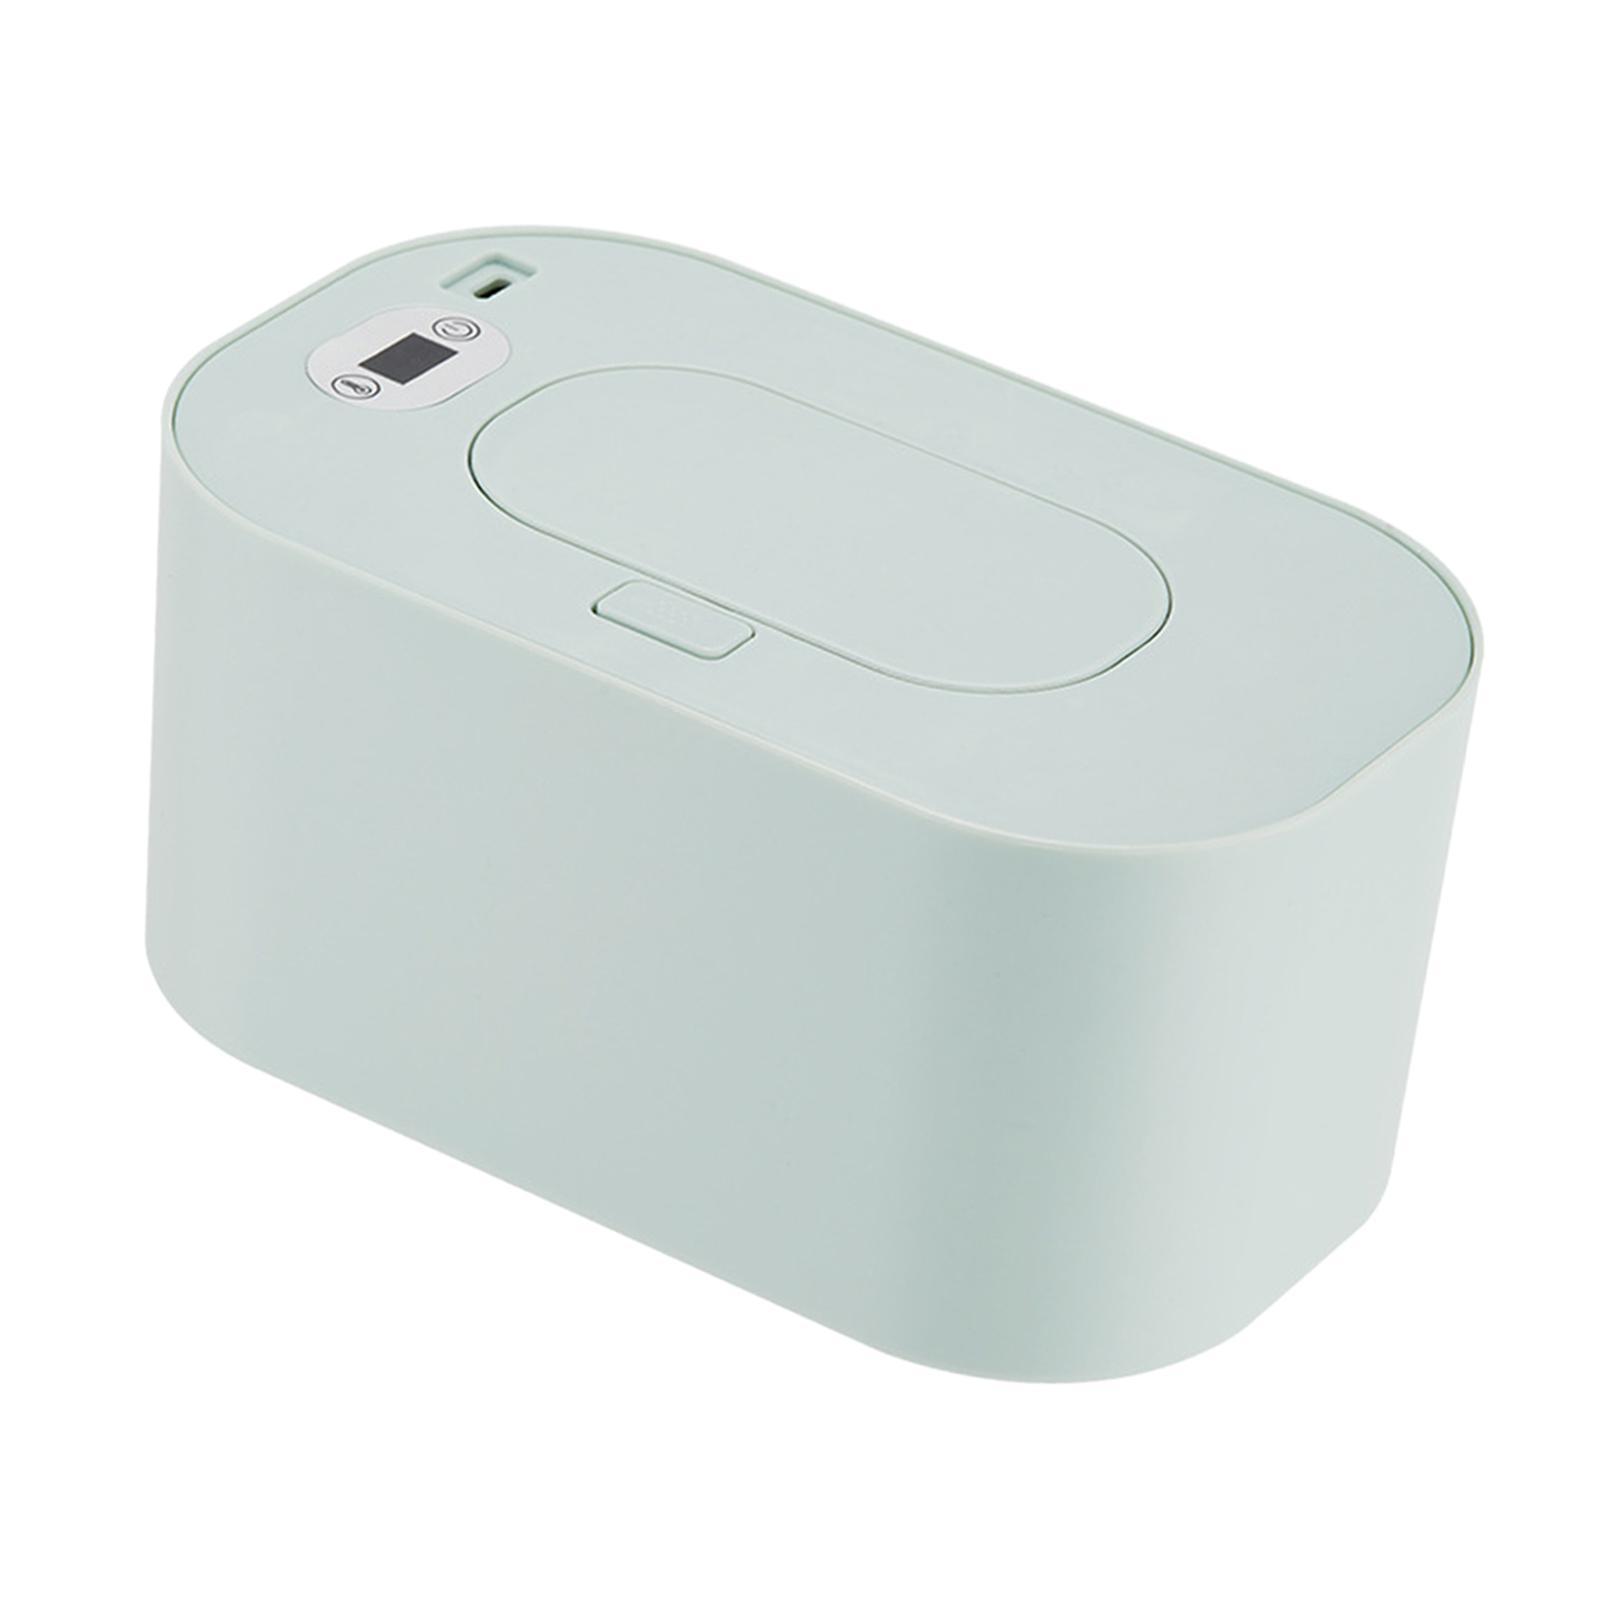 Wipe Warmer Heated Wipe Dispenser Quick Heating System Tissue Heating Machine Wipe Dispenser Container for Bathroom Home